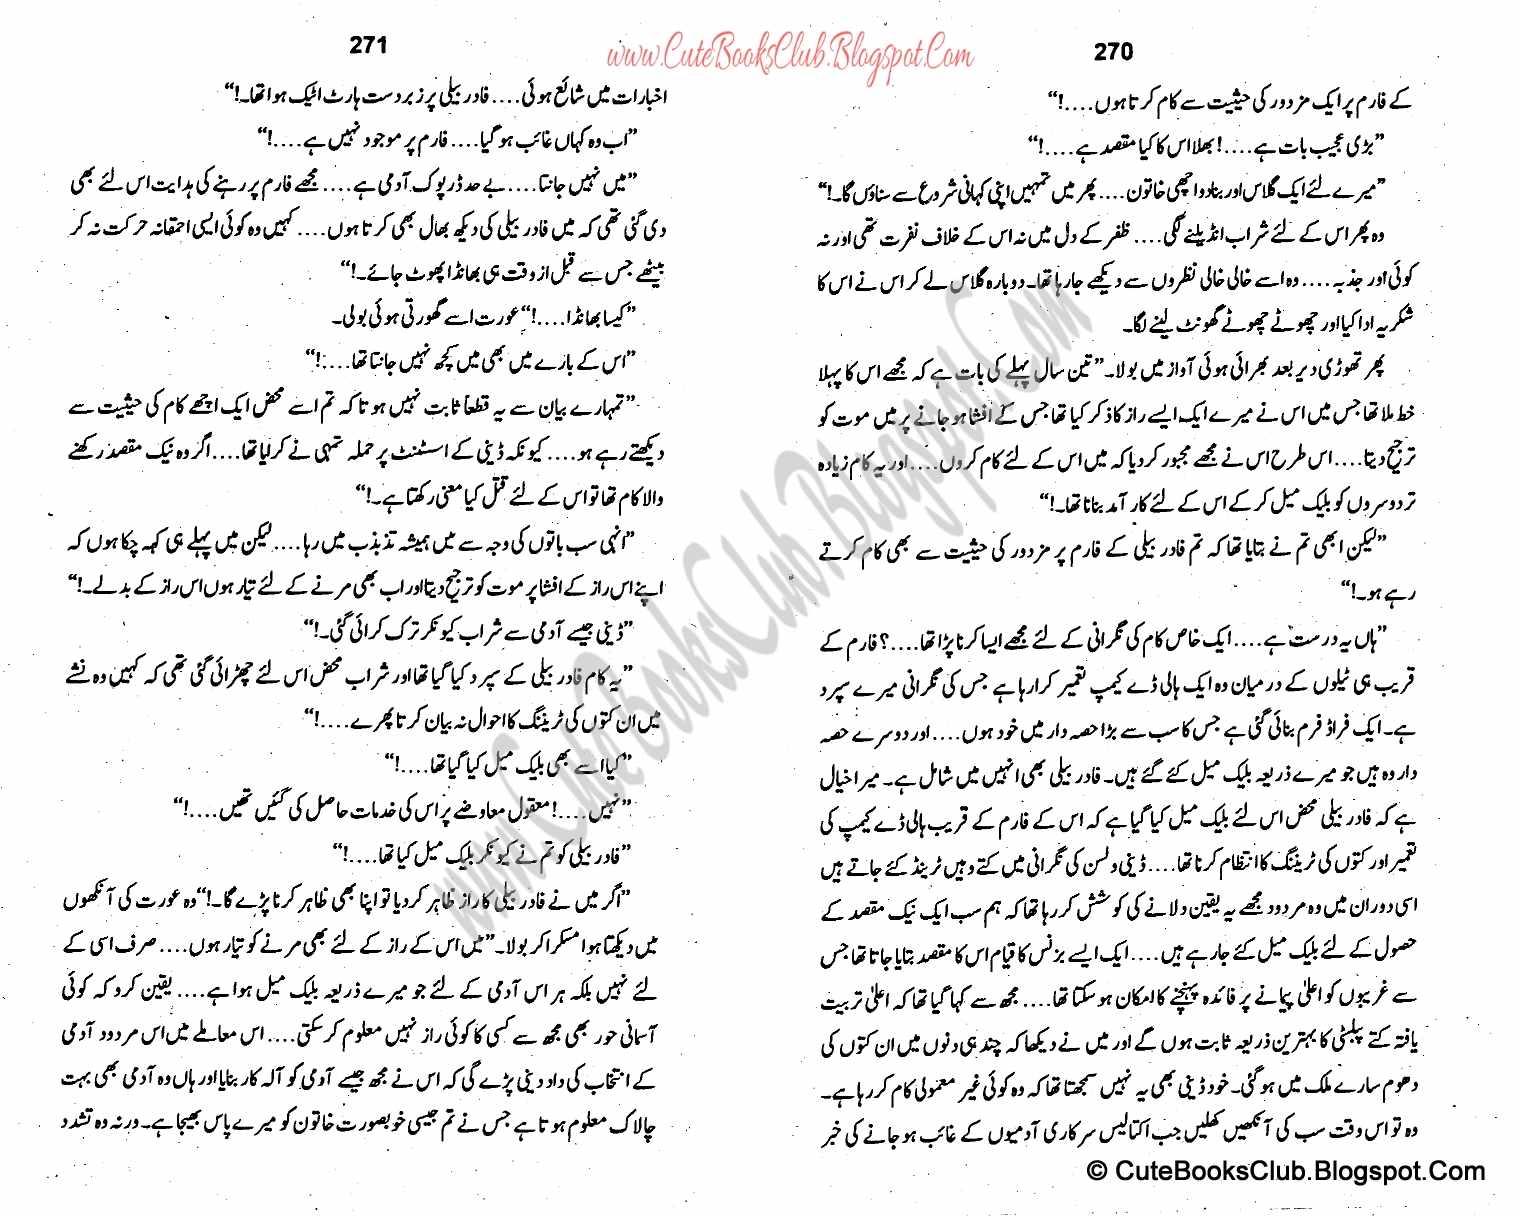 059-Halaku and Co, Imran Series By Ibne Safi (Urdu Novel)